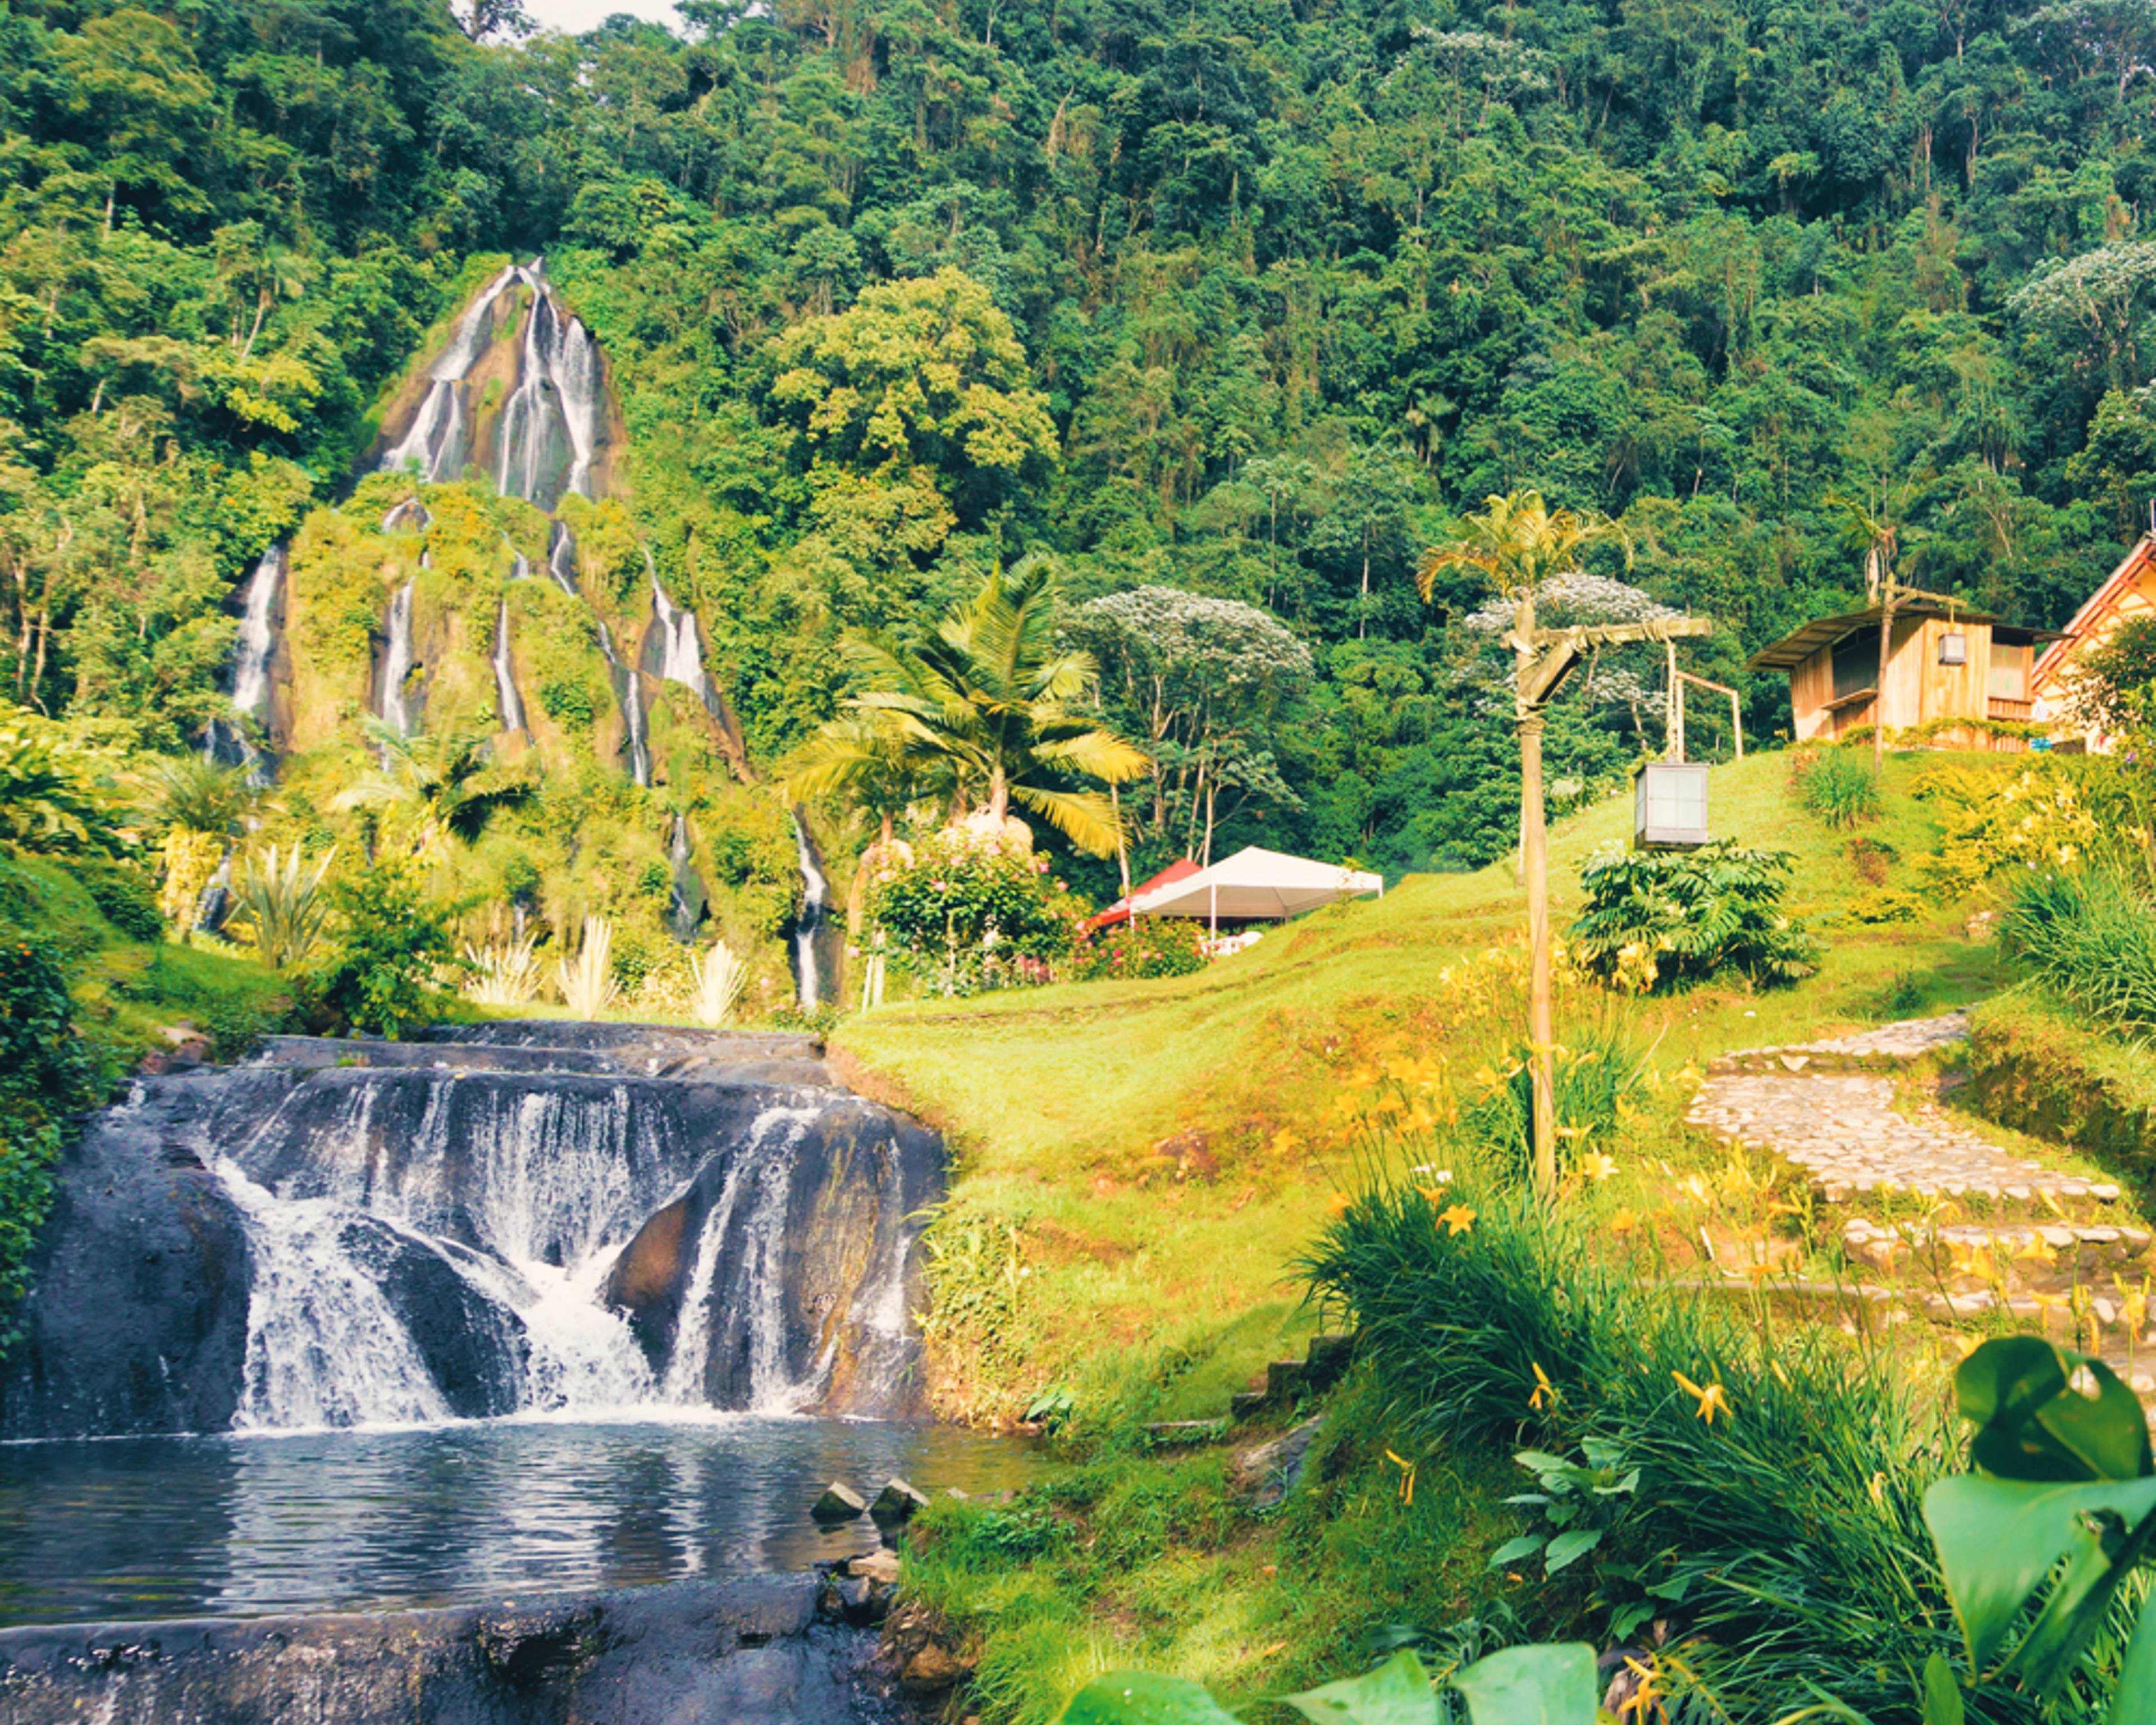 Naturreisen Kolumbien - Reise jetzt individuell gestalten